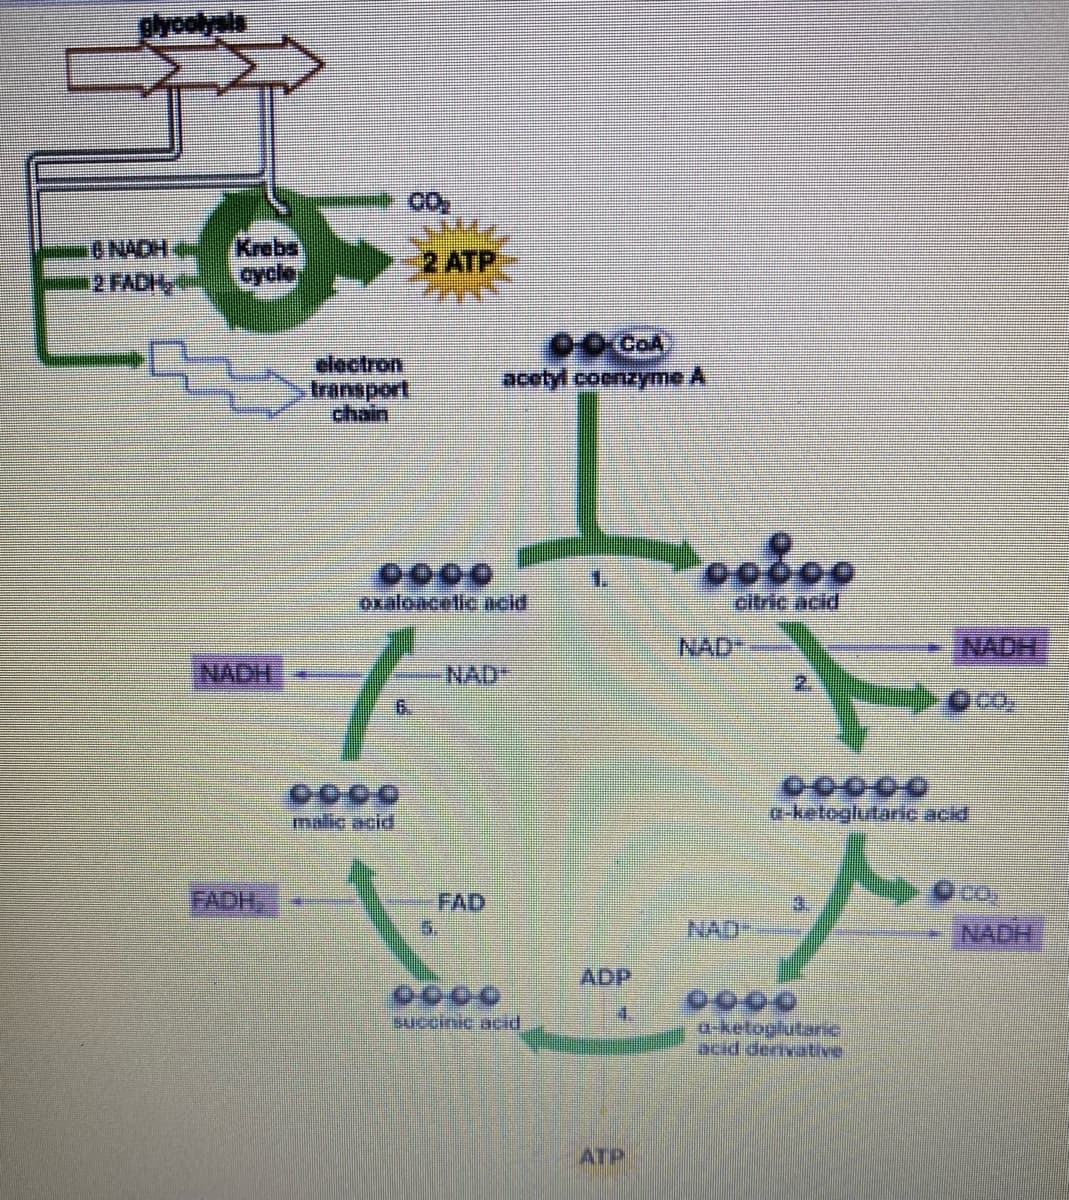 plyoolysls
HOYN O
2 FADH
Krebs
cycle
2 ATP
electron
transport
chain
00 CoA
acetyl coenzyme A
0000
oxaloacetic acid
1.
citric acid
NAD
NADH
NADH
NAD
2.
6.
O0చఉ 0
a-ketoglutaric acid
malic acid
FADH
FAD
5.
3.
NAD
NADH
ADP
succinic acid
4.
a-ketoglutanic
acid denvative
ATP
